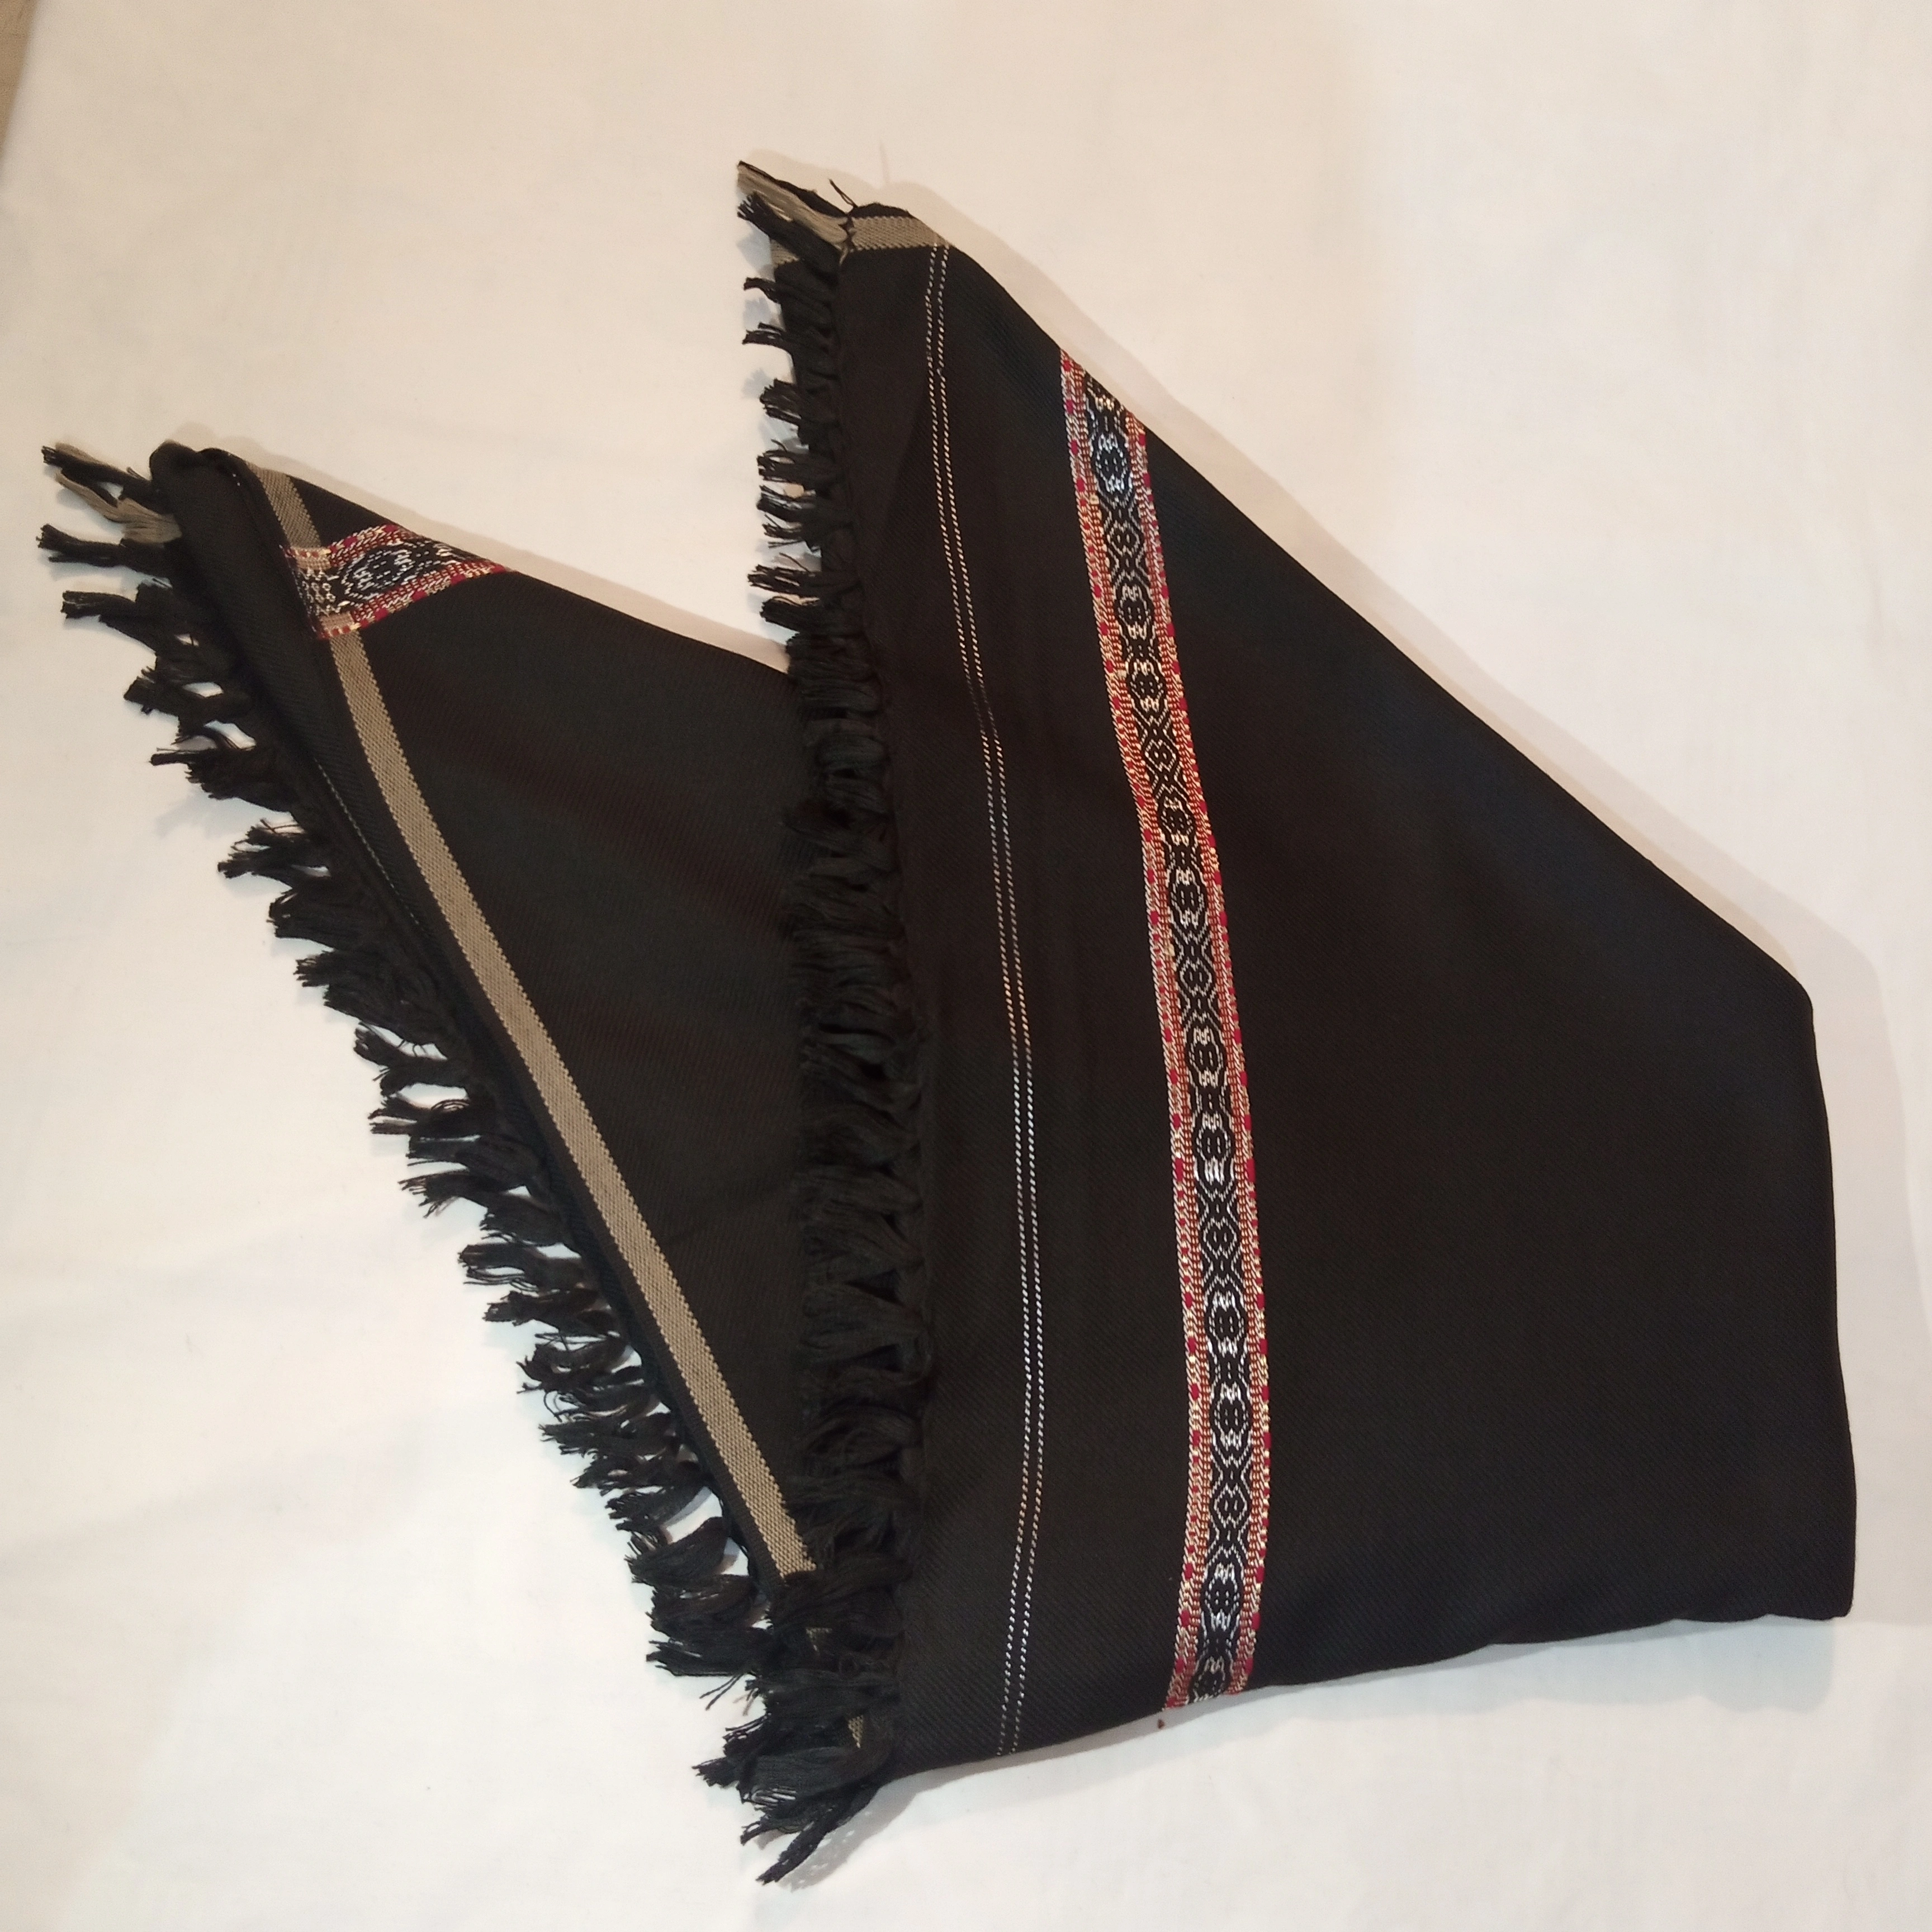 second image of woollen black shawl.